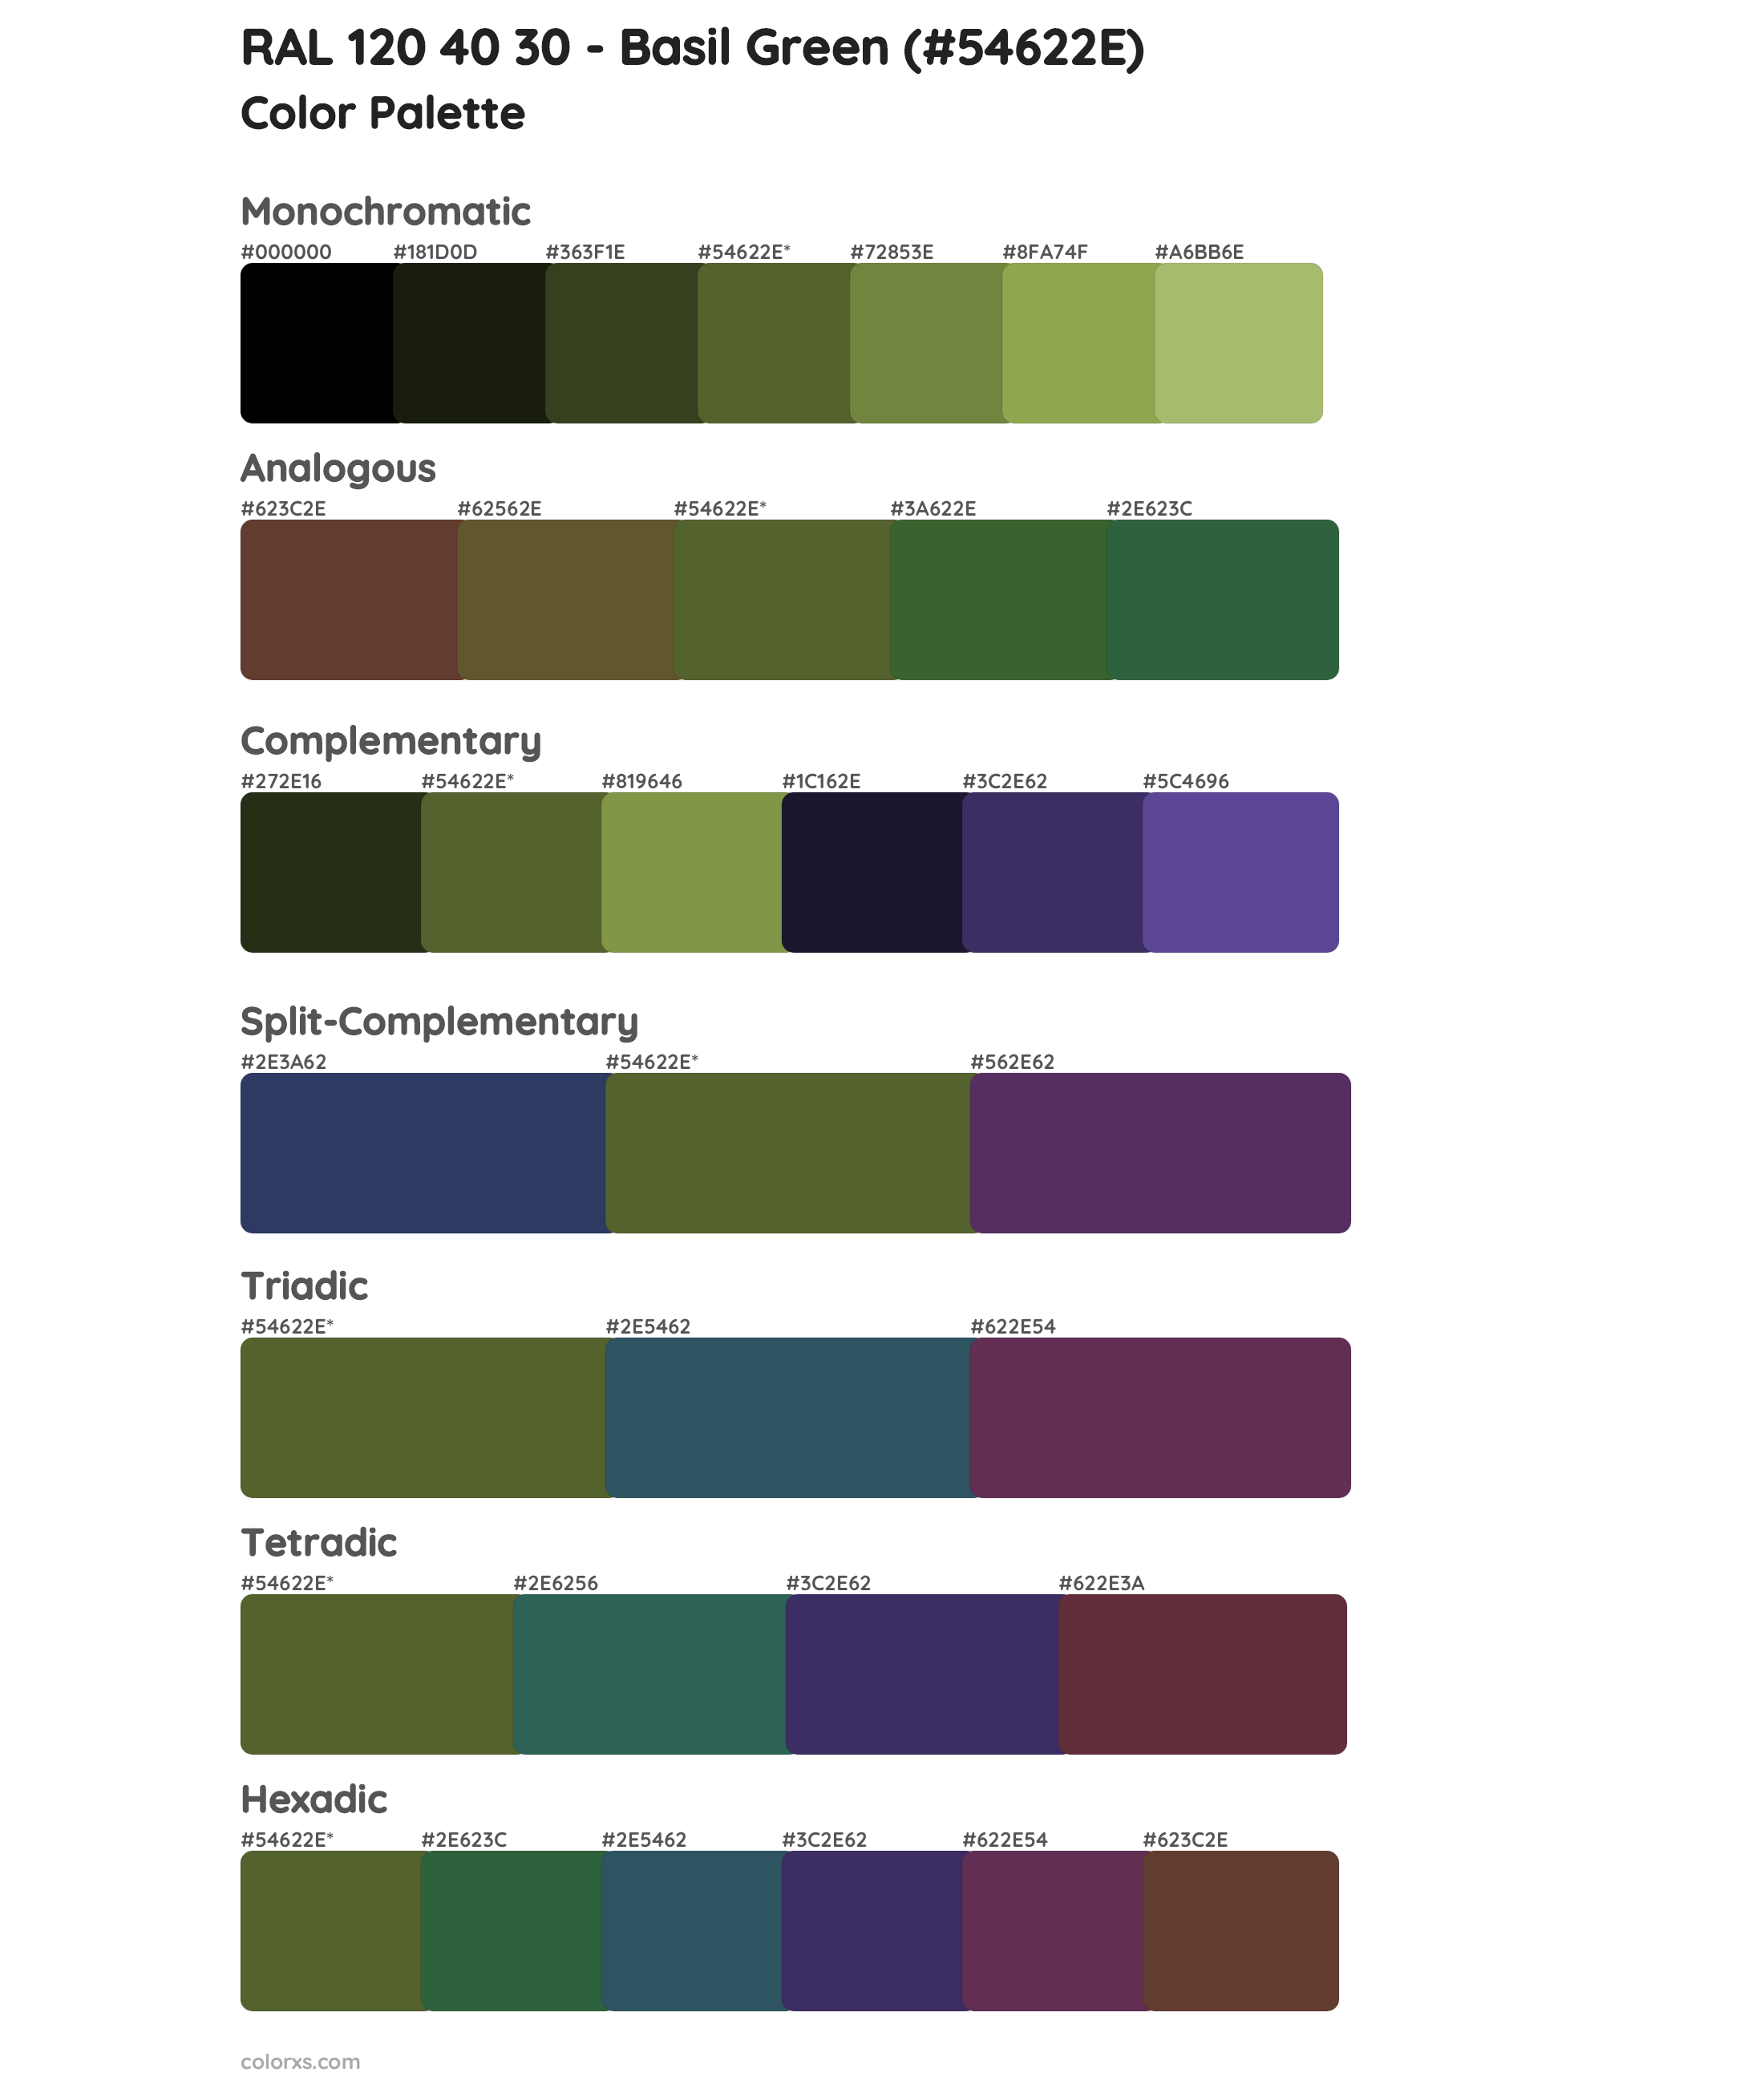 RAL 120 40 30 - Basil Green Color Scheme Palettes